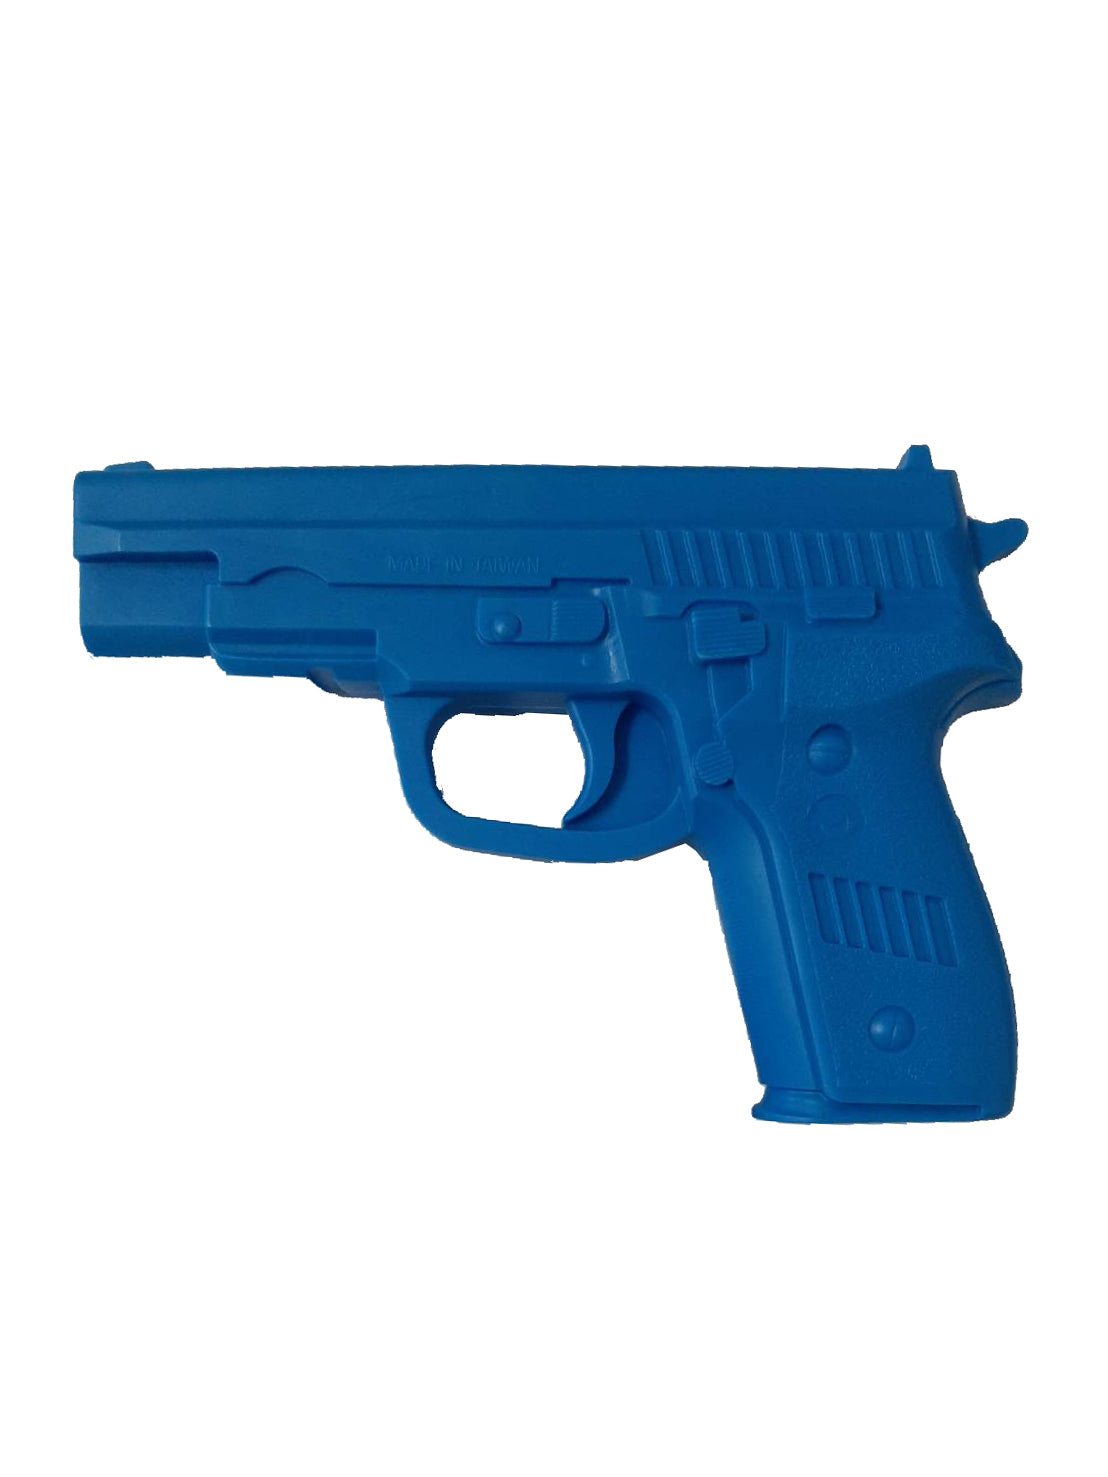 Rubber Standard Sig P226 Training Gun Pistol Safety Color